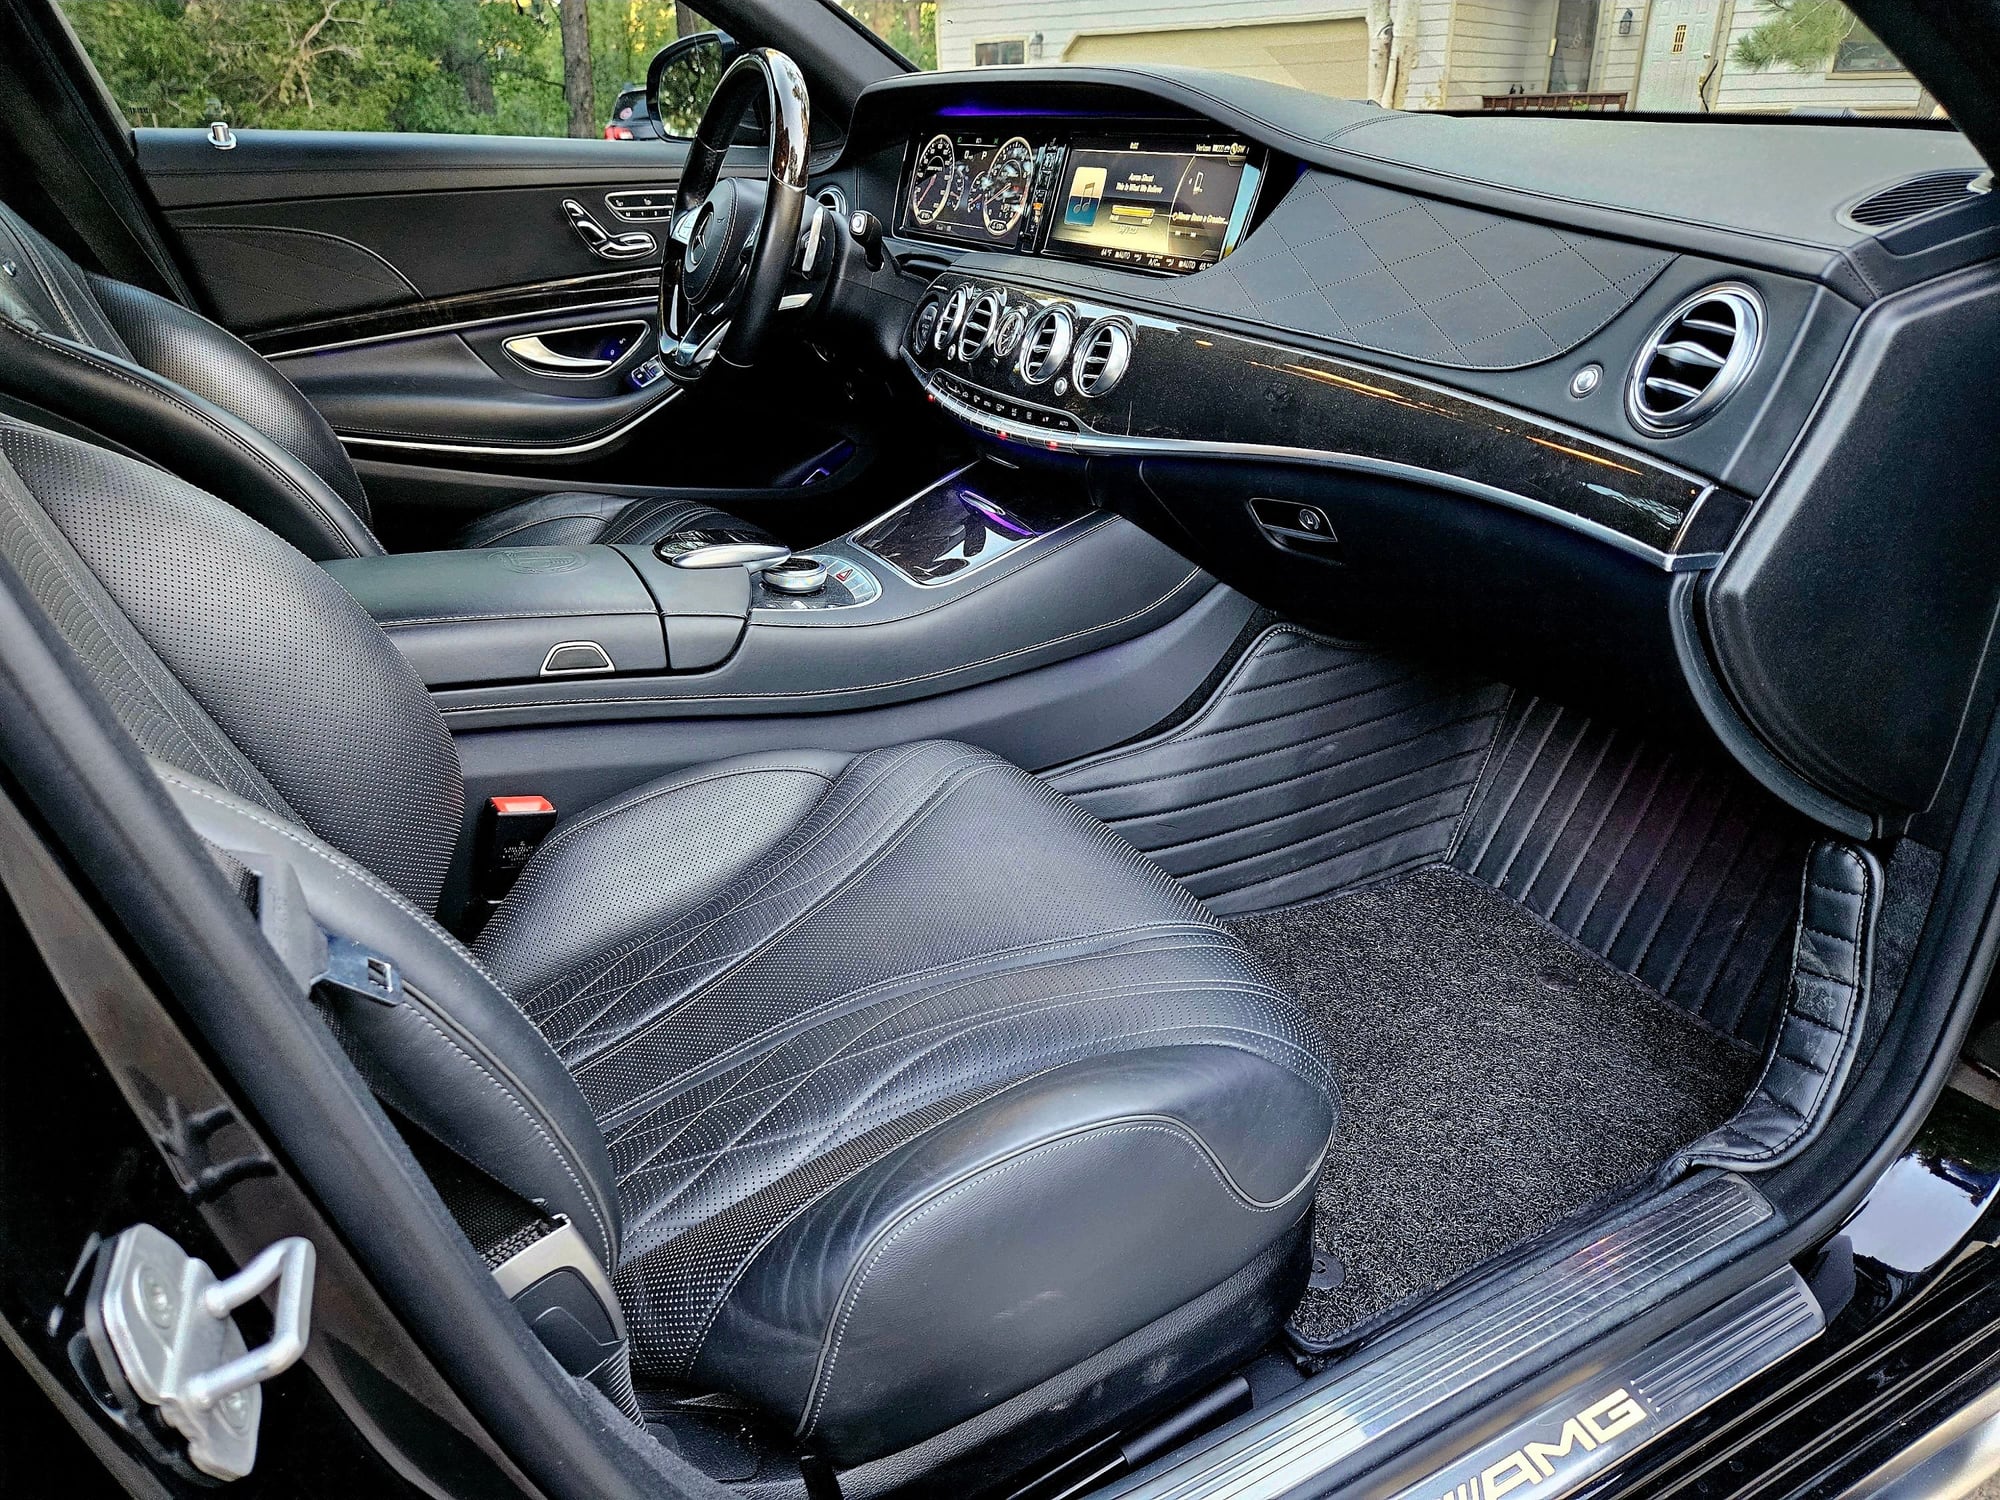 2016 Mercedes-Benz S63 AMG - Black on Black Beauty - Used - VIN WDDUG7JB3GA218045 - 44,000 Miles - 8 cyl - AWD - Automatic - Sedan - Black - Durango, CO 81301, United States